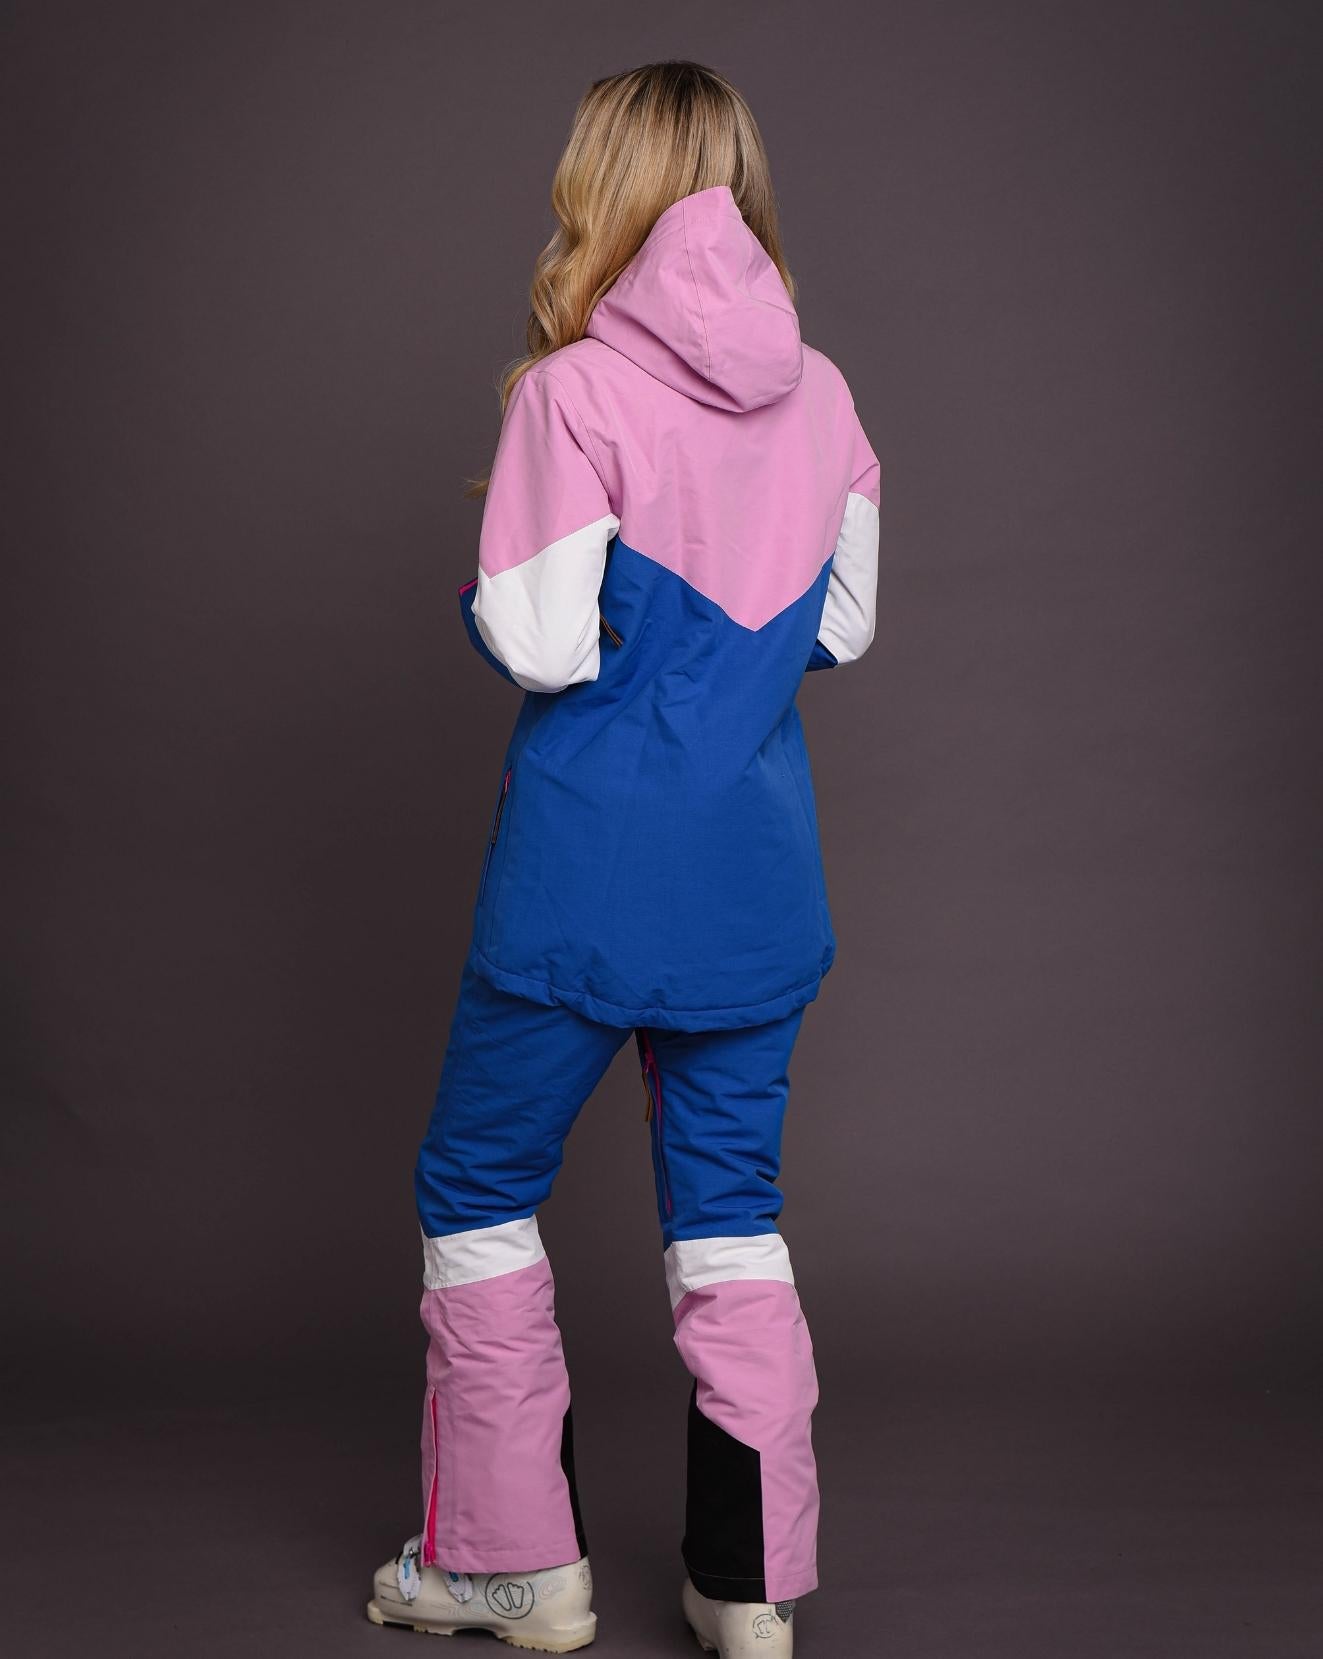 Blue White & Pink Ladies Ski Jacket - OOSC Clothing